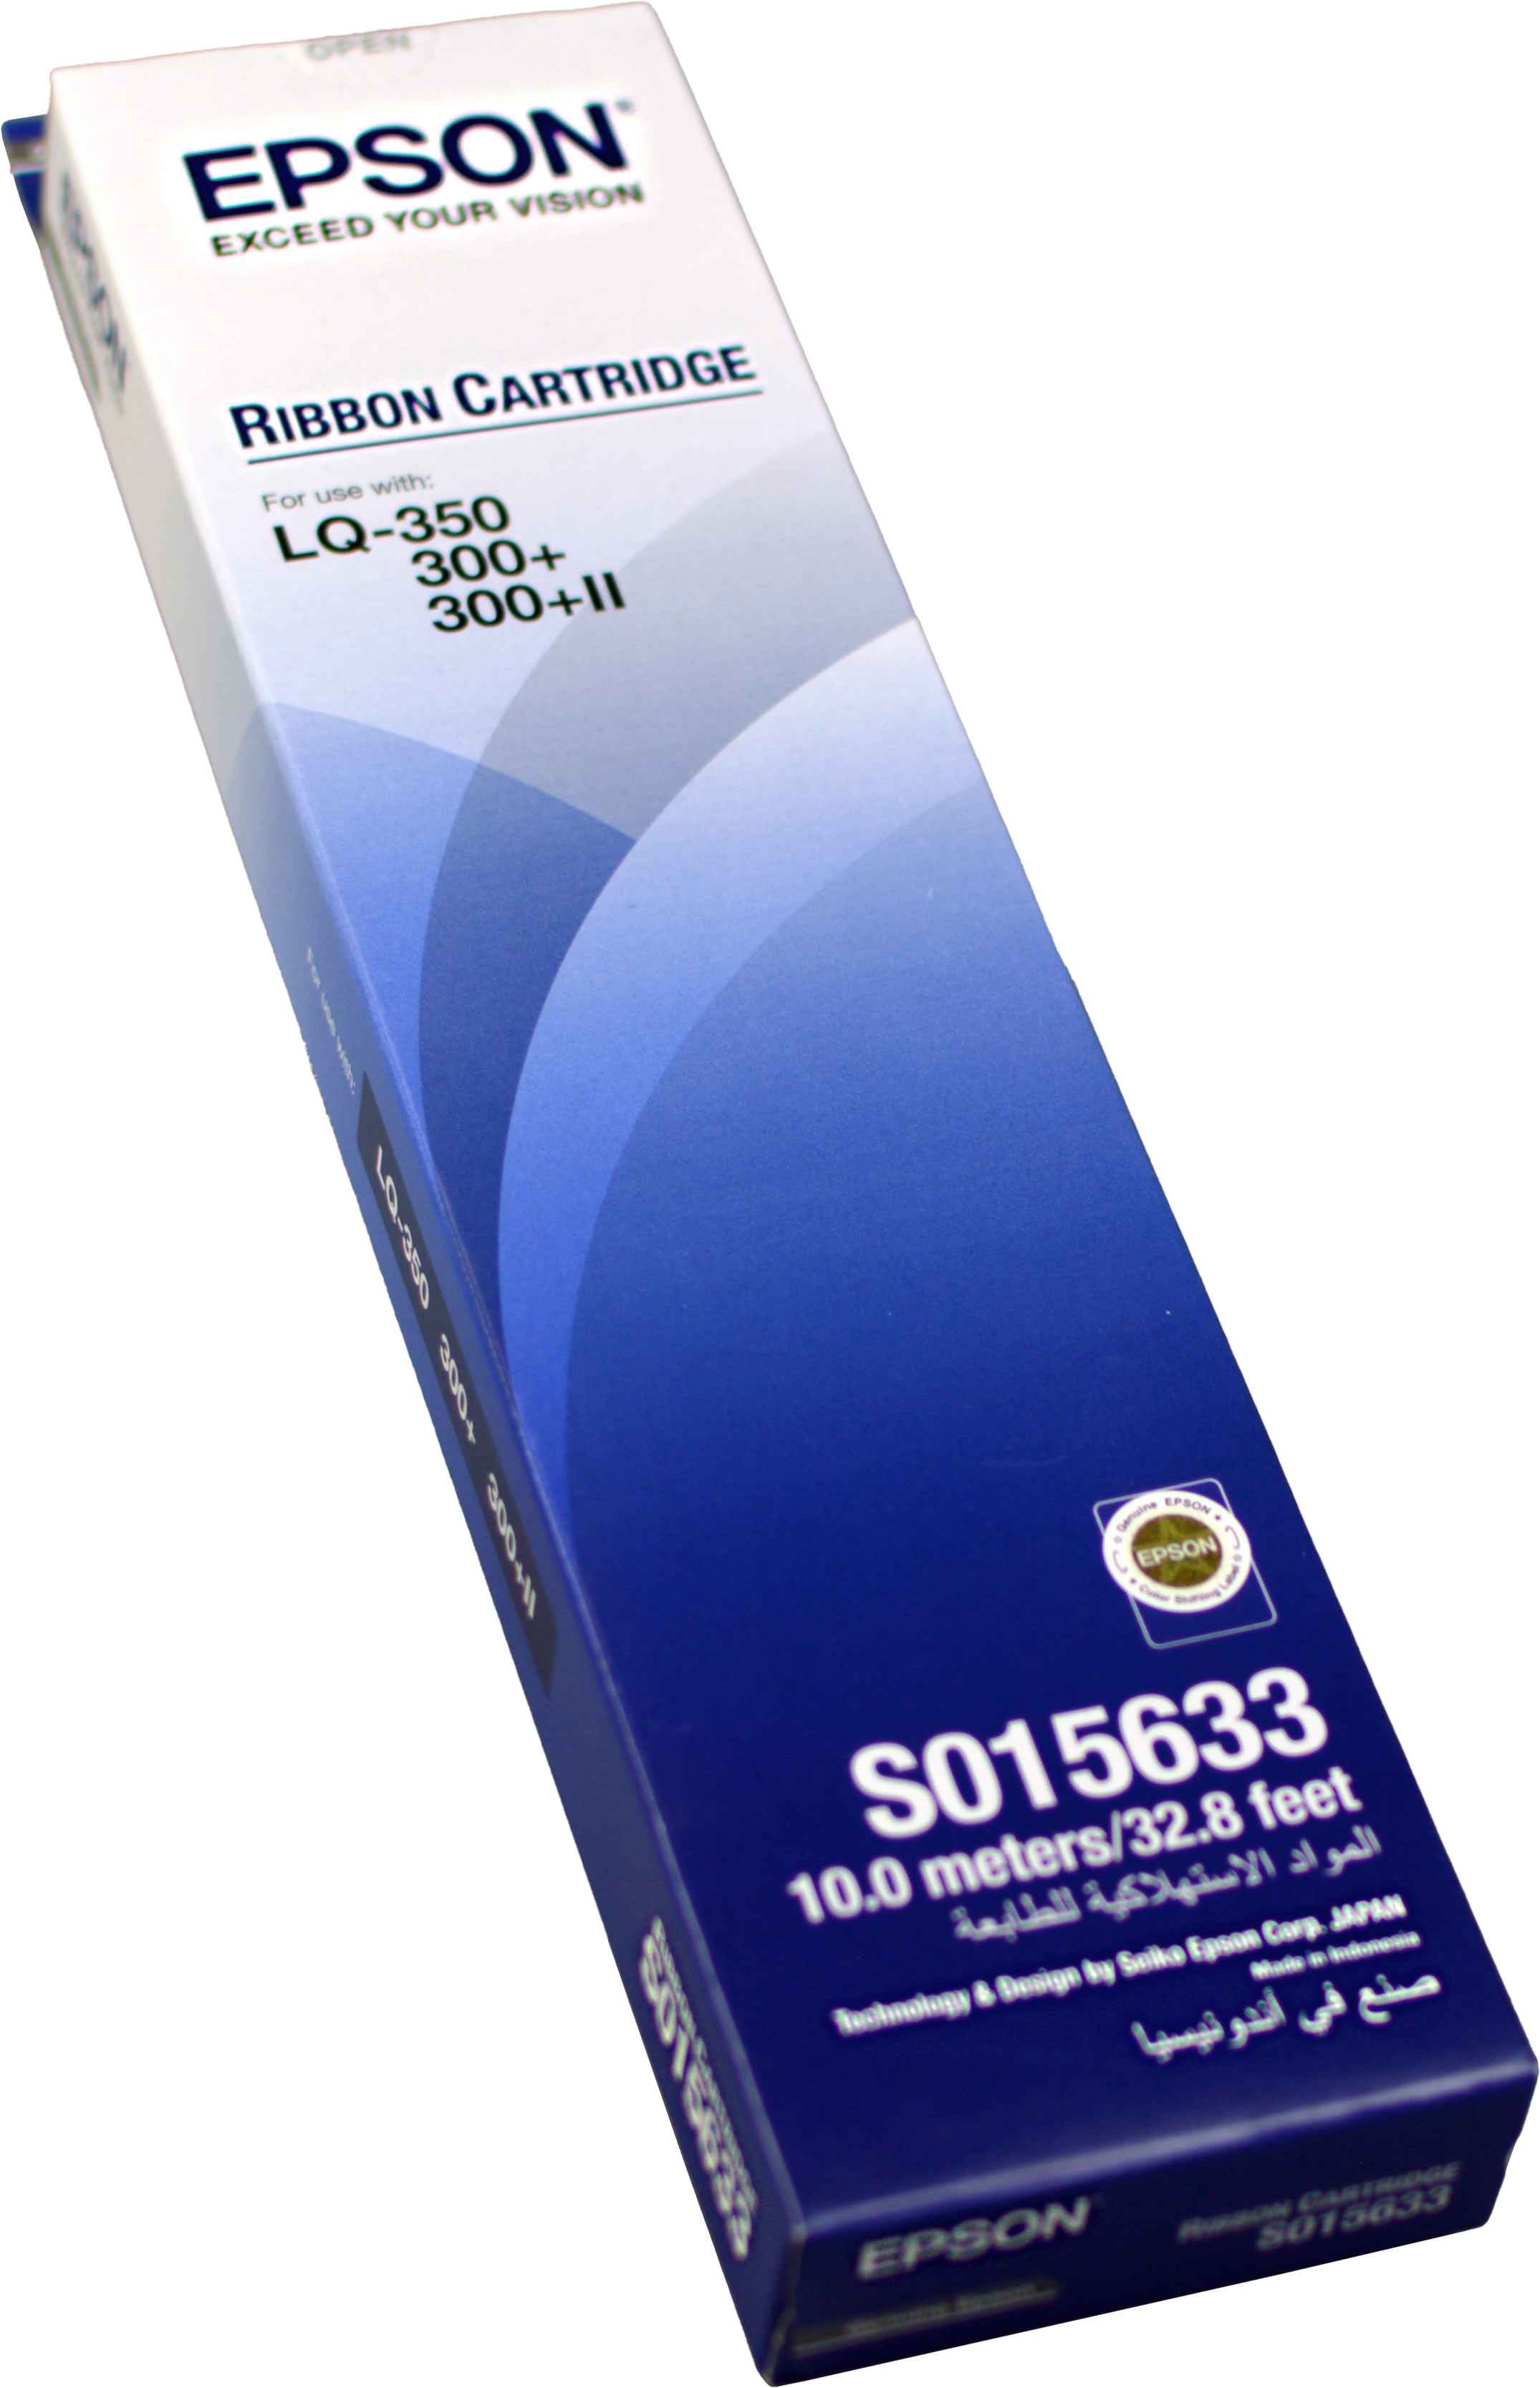 Epson Originalband LQ 300  schwarz  C13S015633